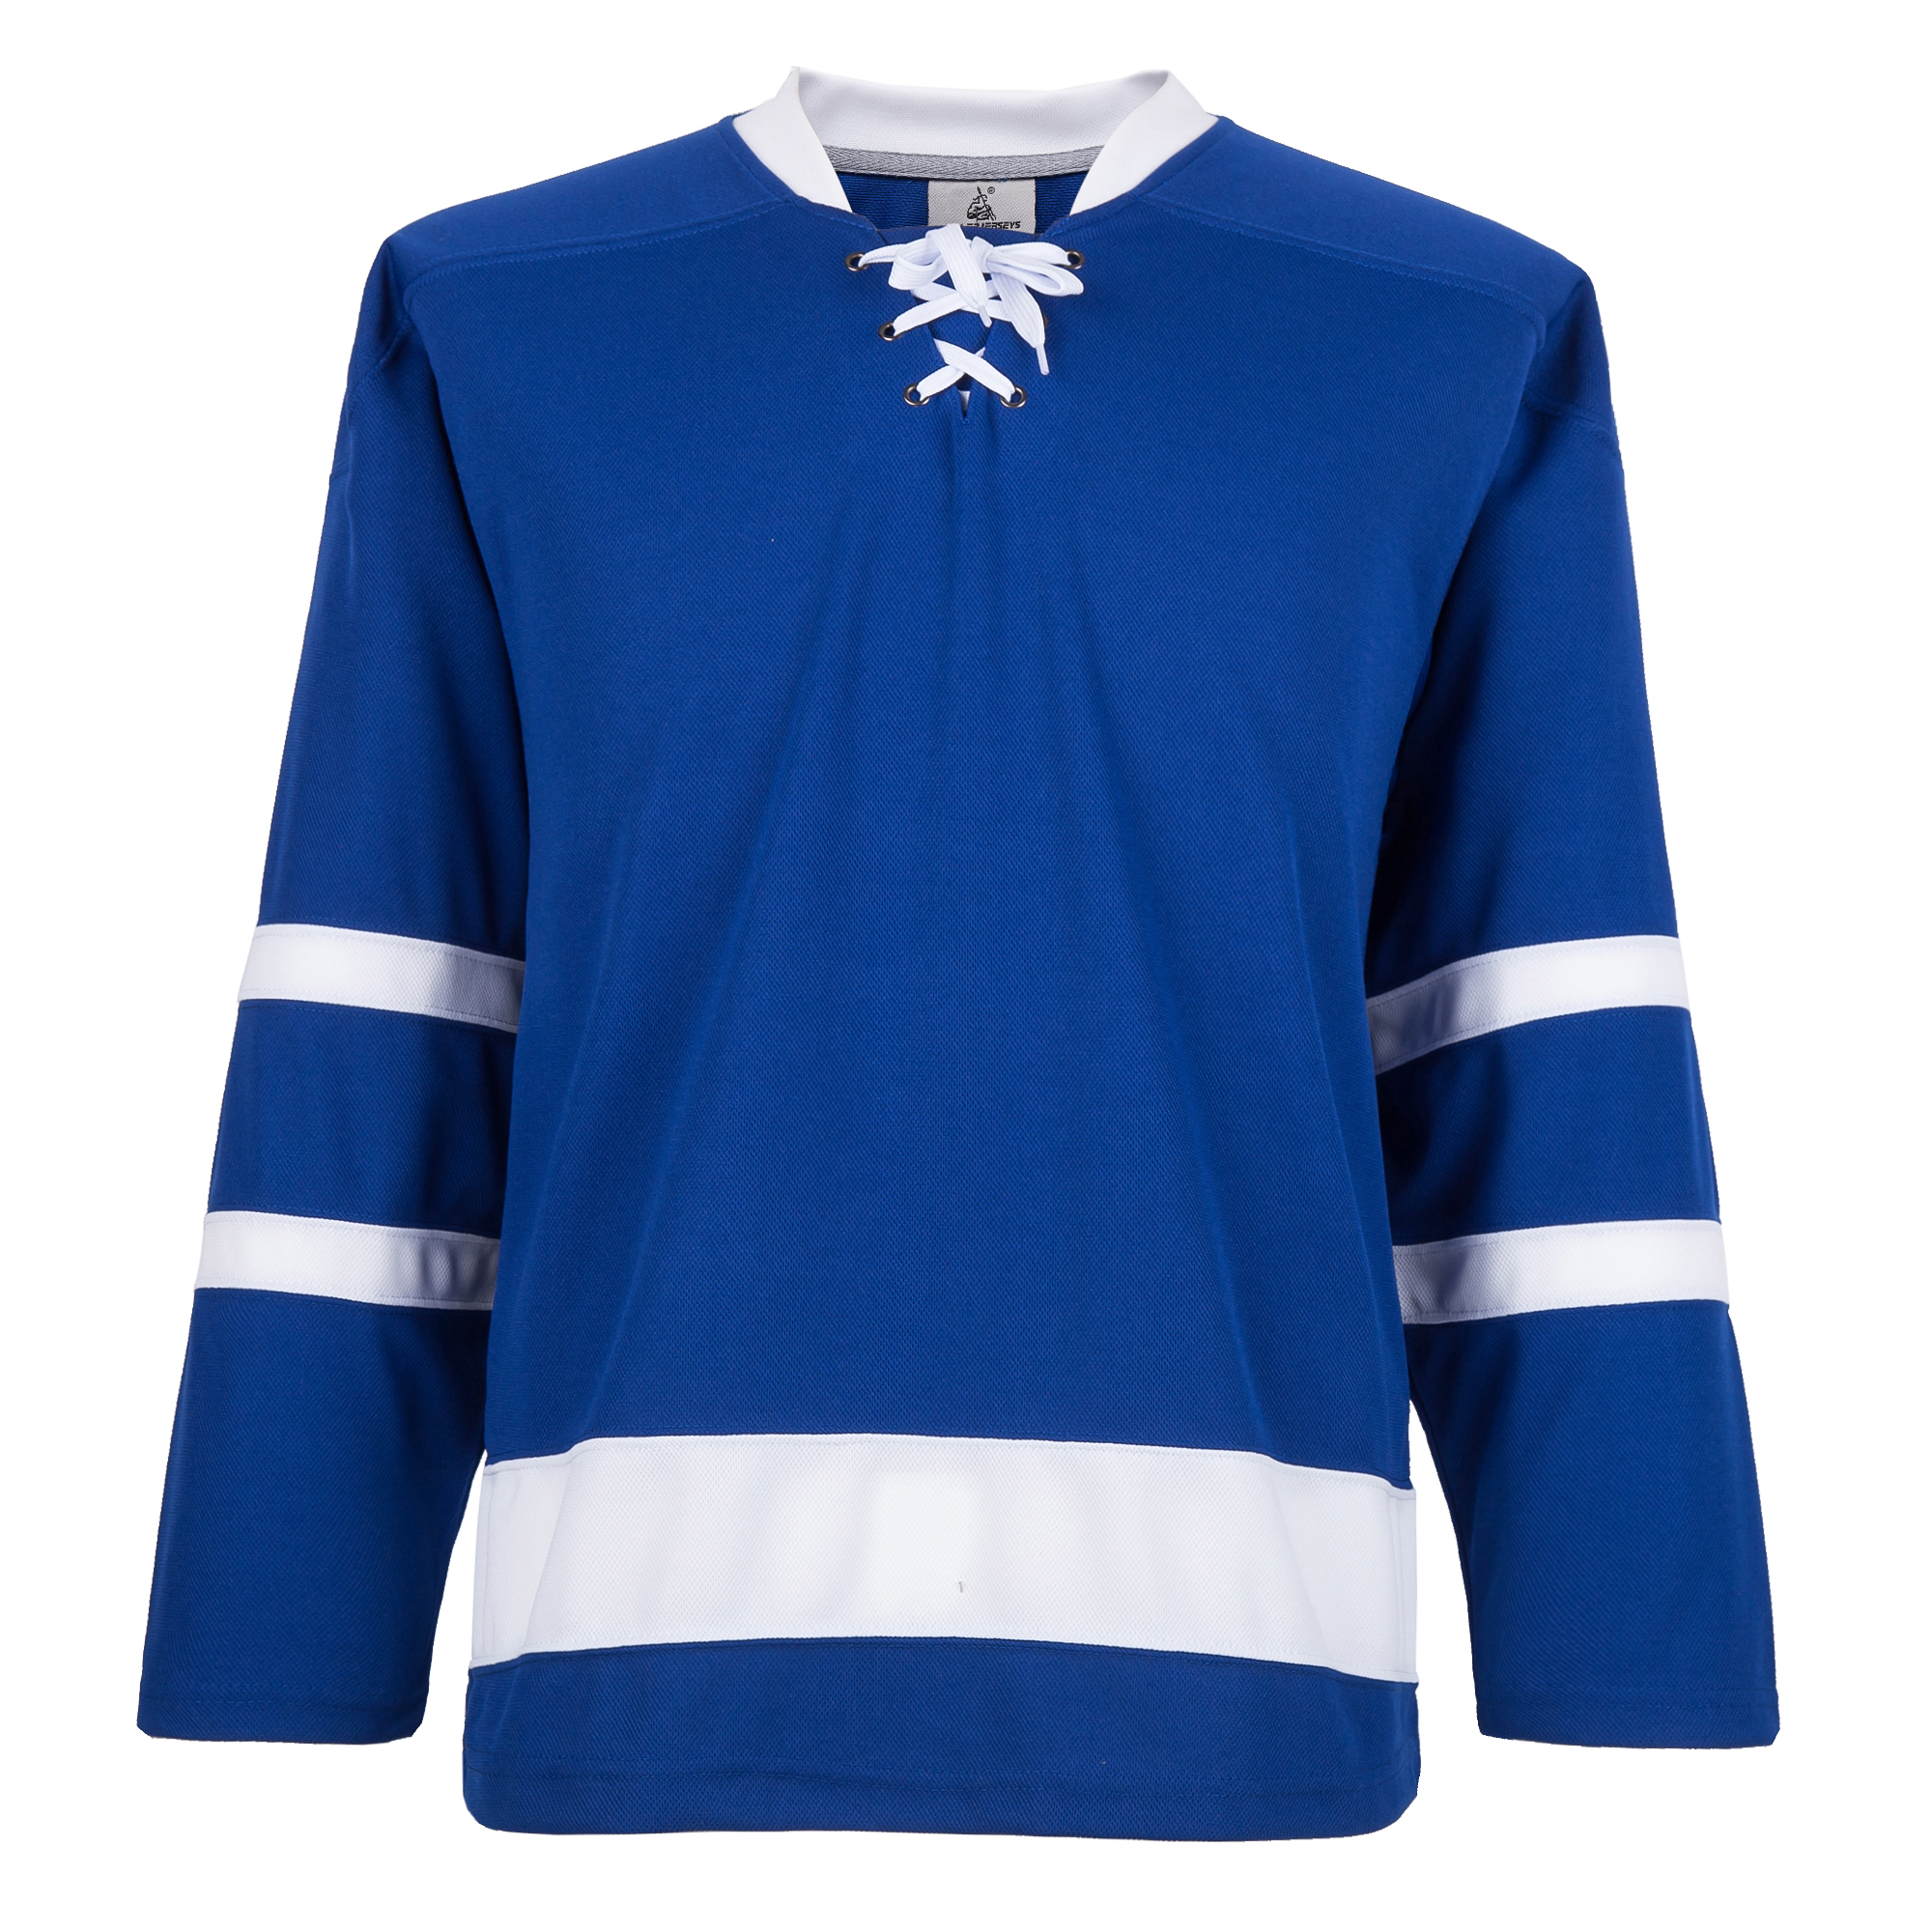 H900-E066 Blue Blank hockey Practice Jerseys